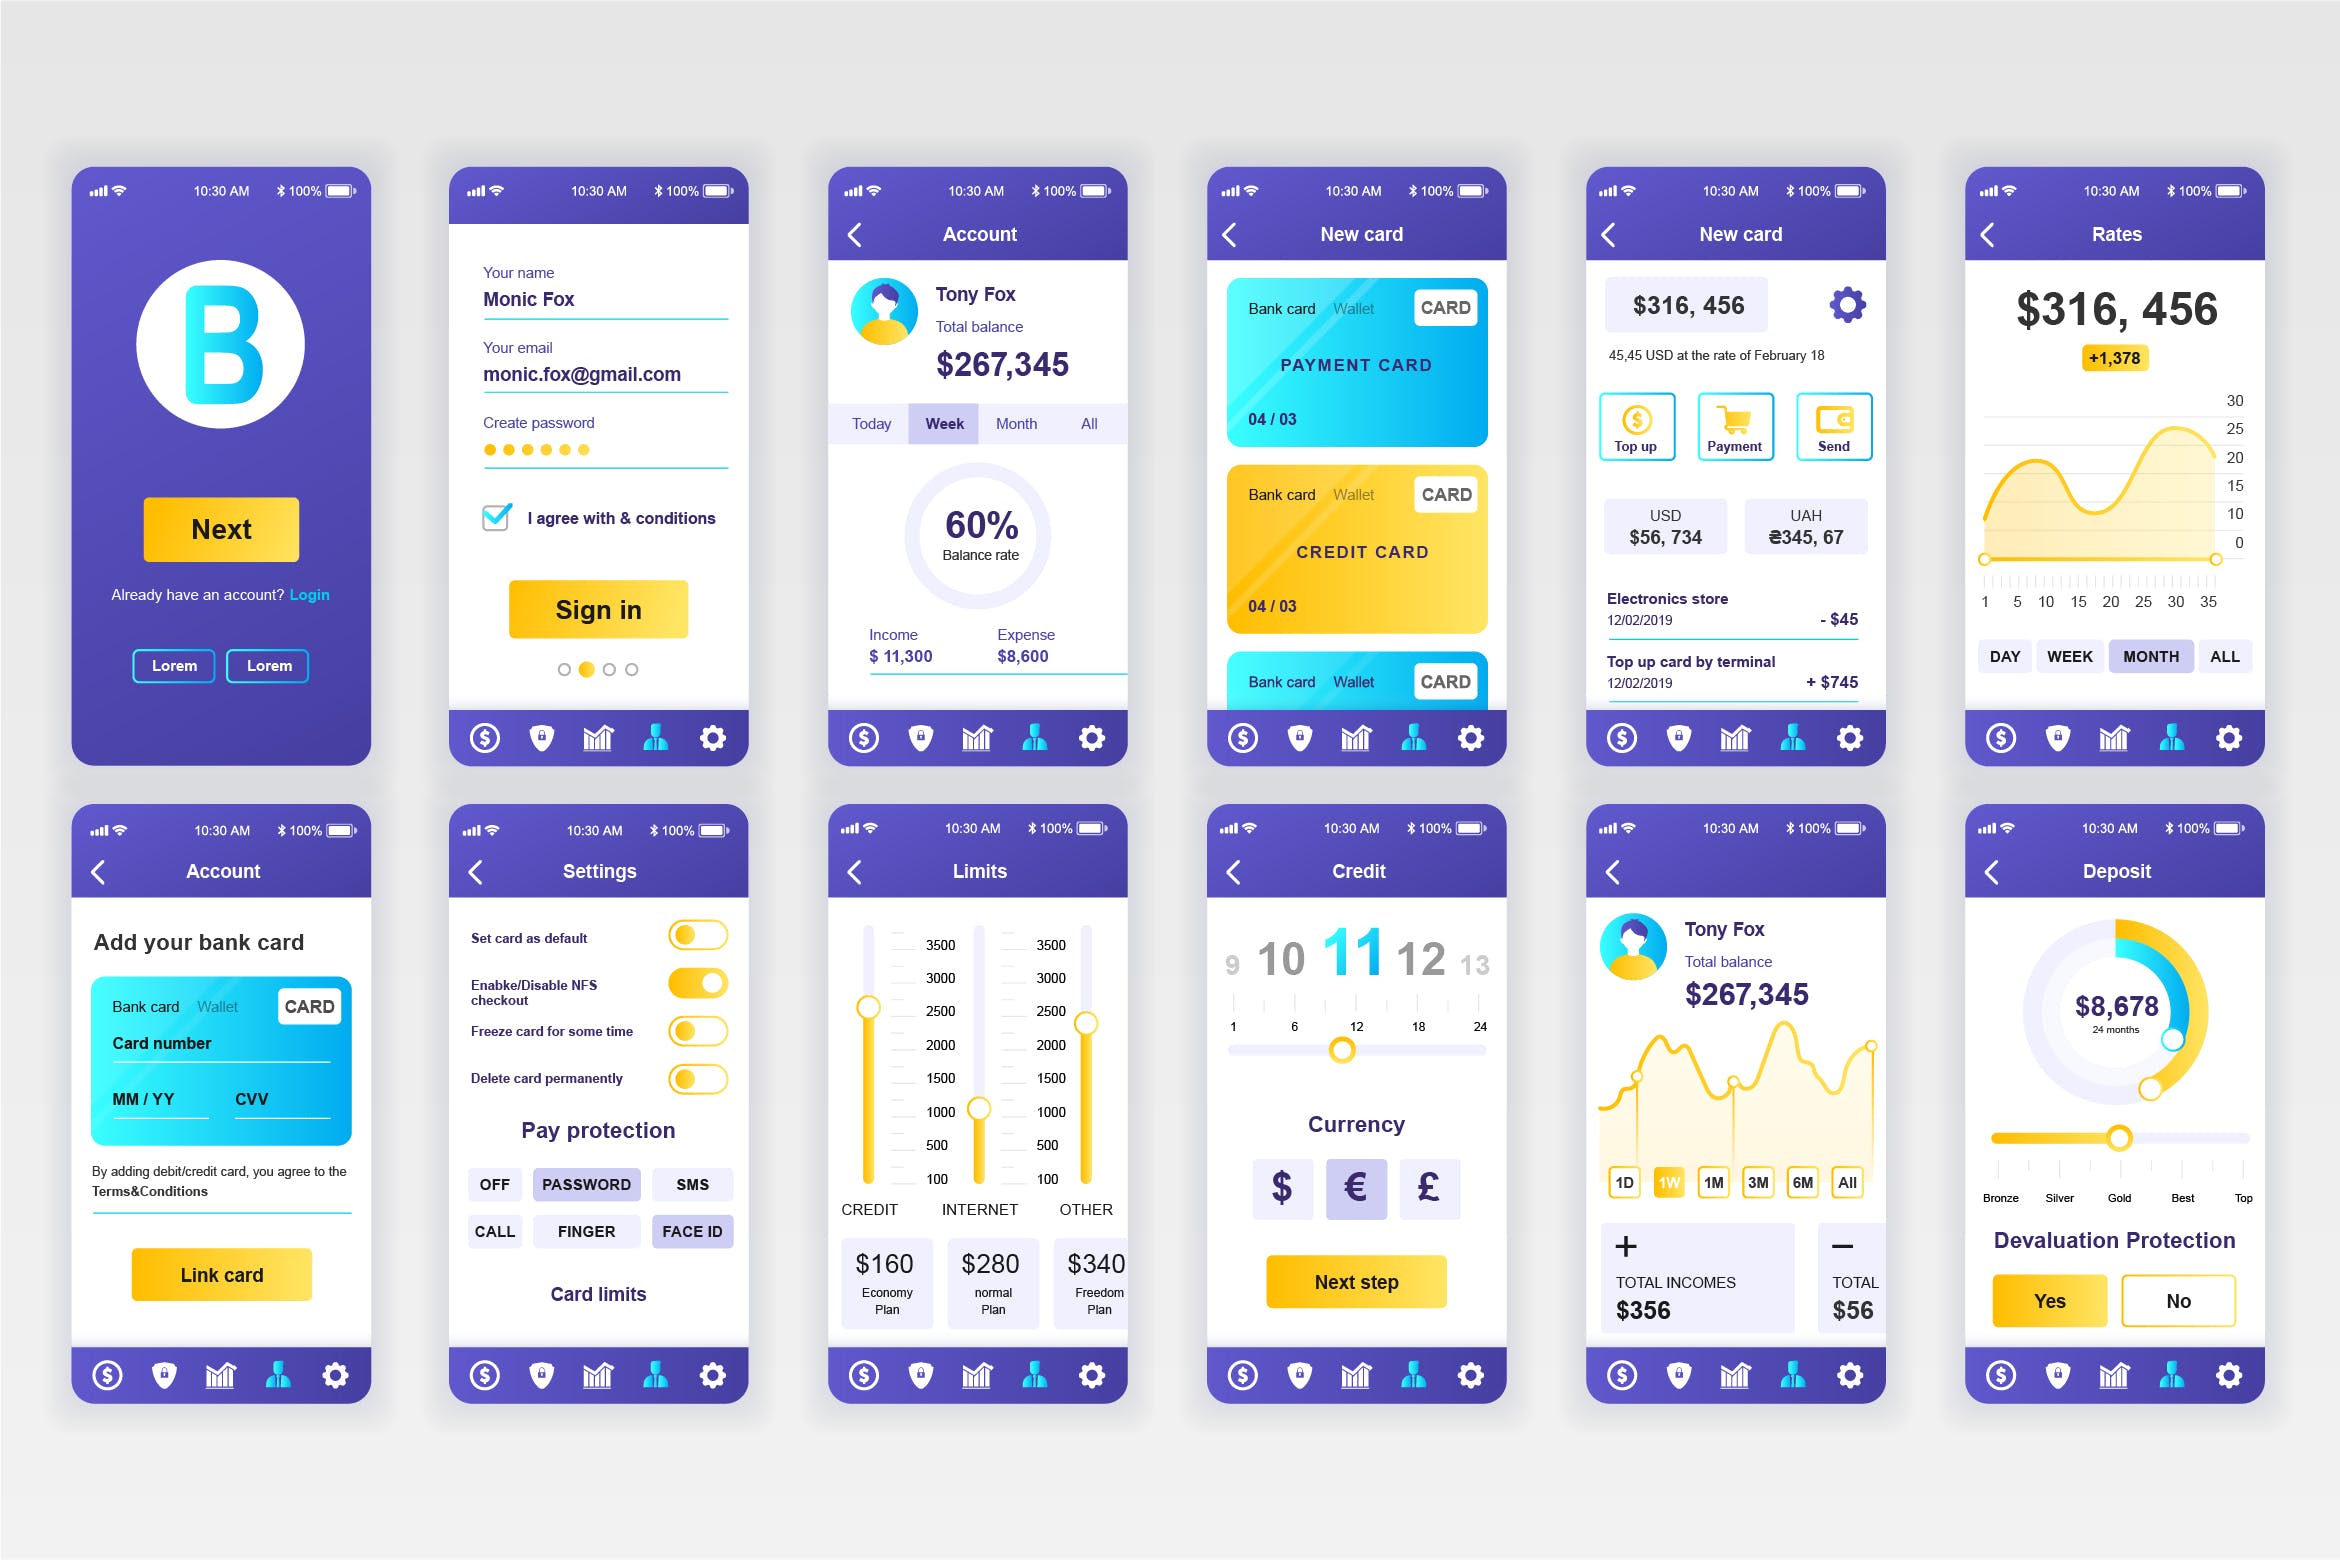 网上银行APP应用用户交互界面UI设计套件 Banking Mobile App UX and UI Kit插图